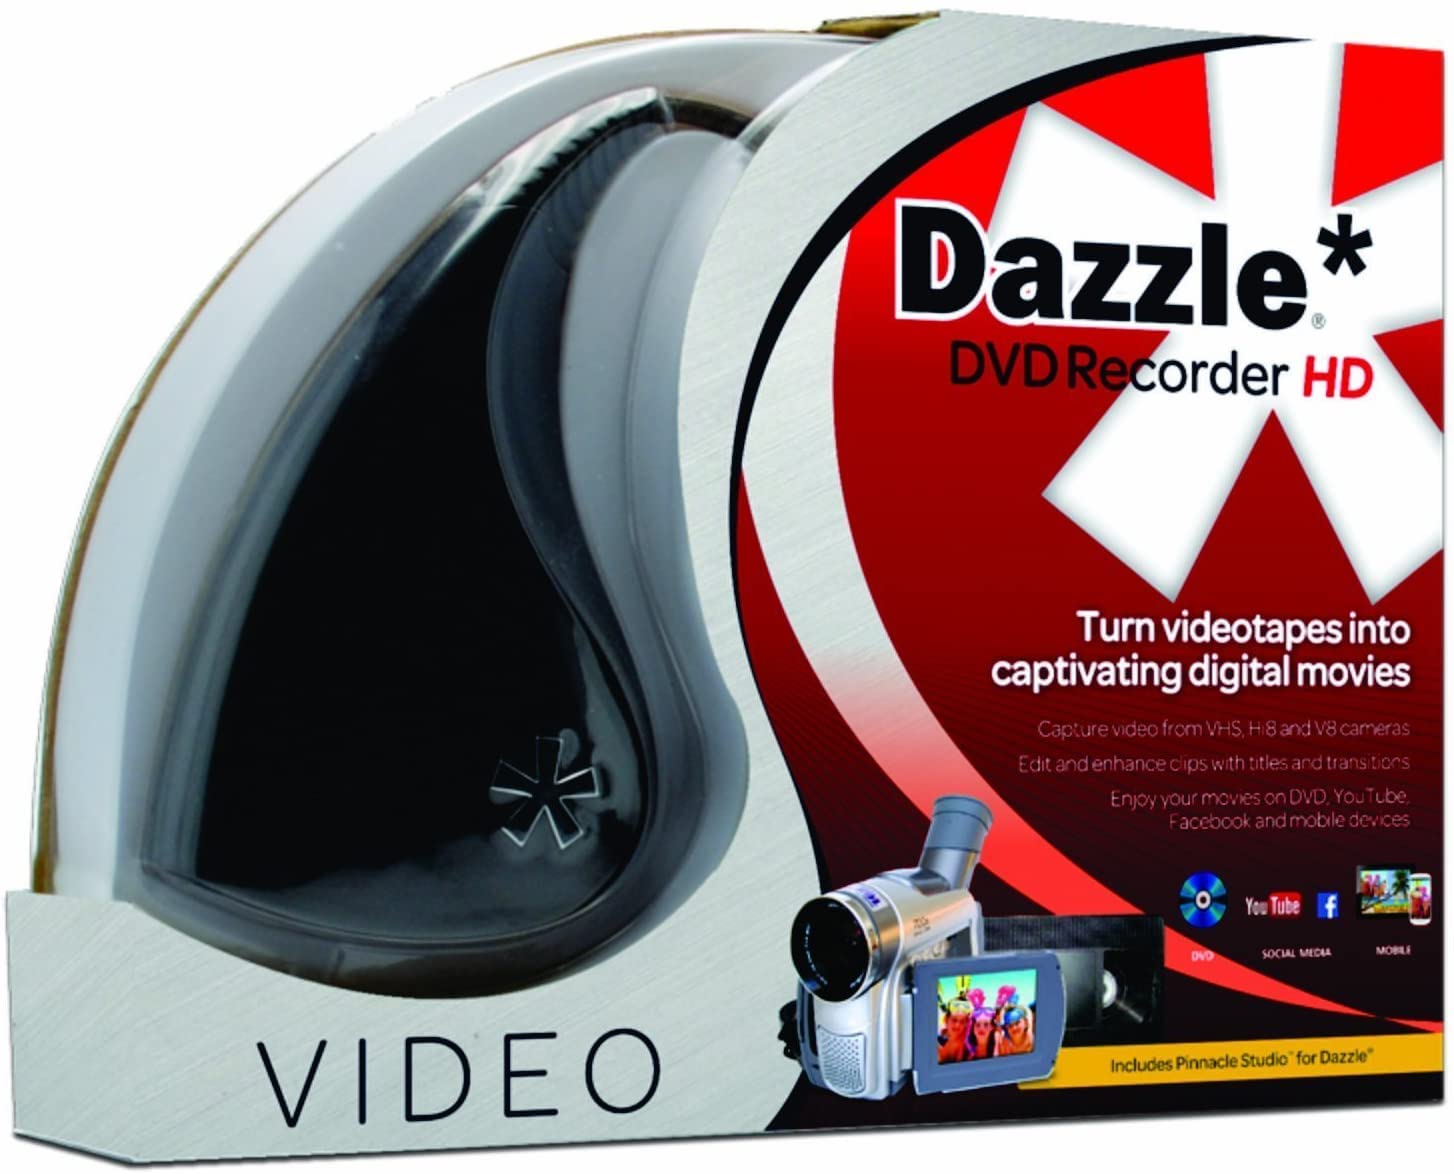 Corel Dazzle DVD Recorder HD | Video Capture Device + Video Editing Software [PC Disc]